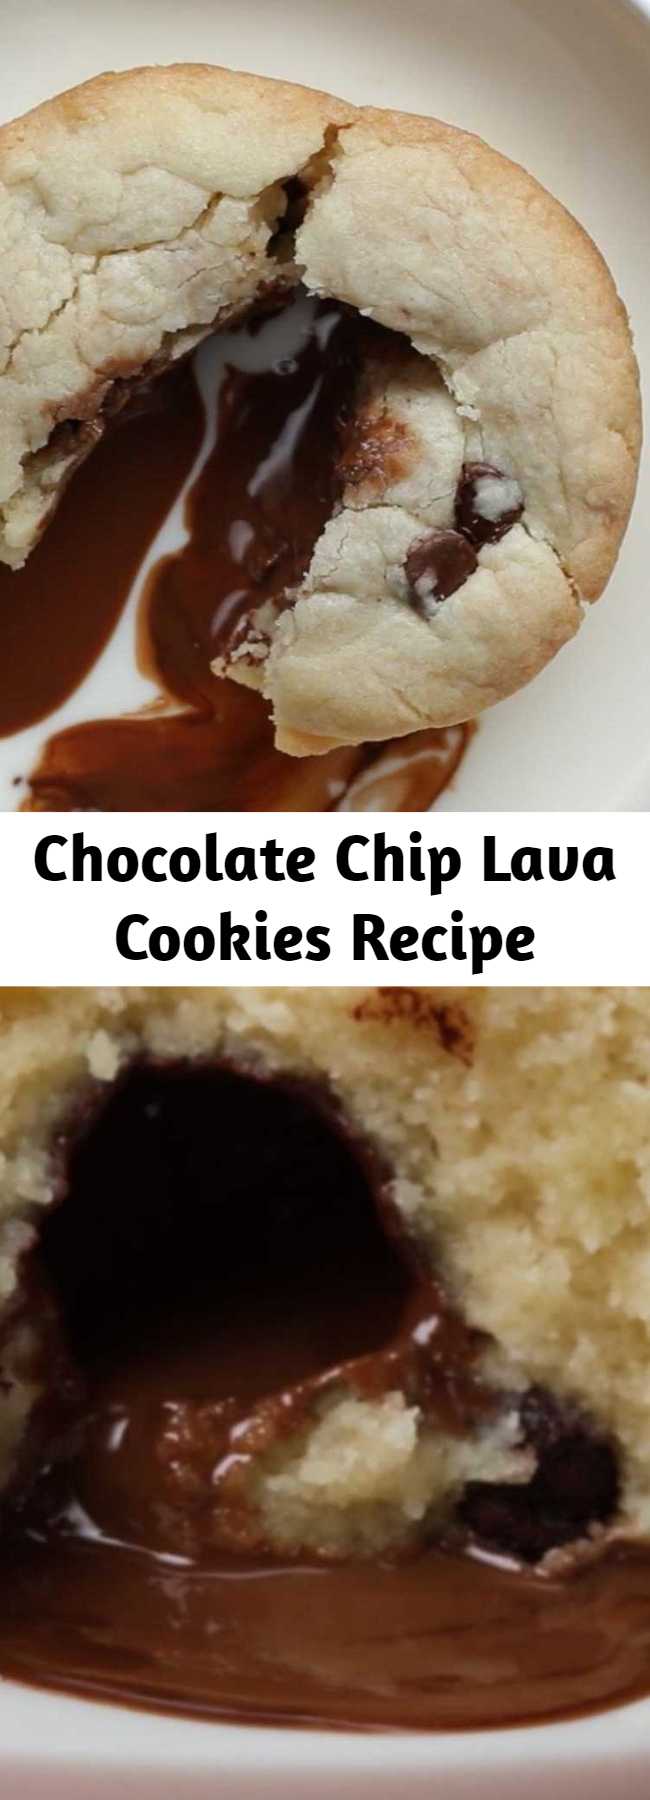 Chocolate Chip Lava Cookies Recipe